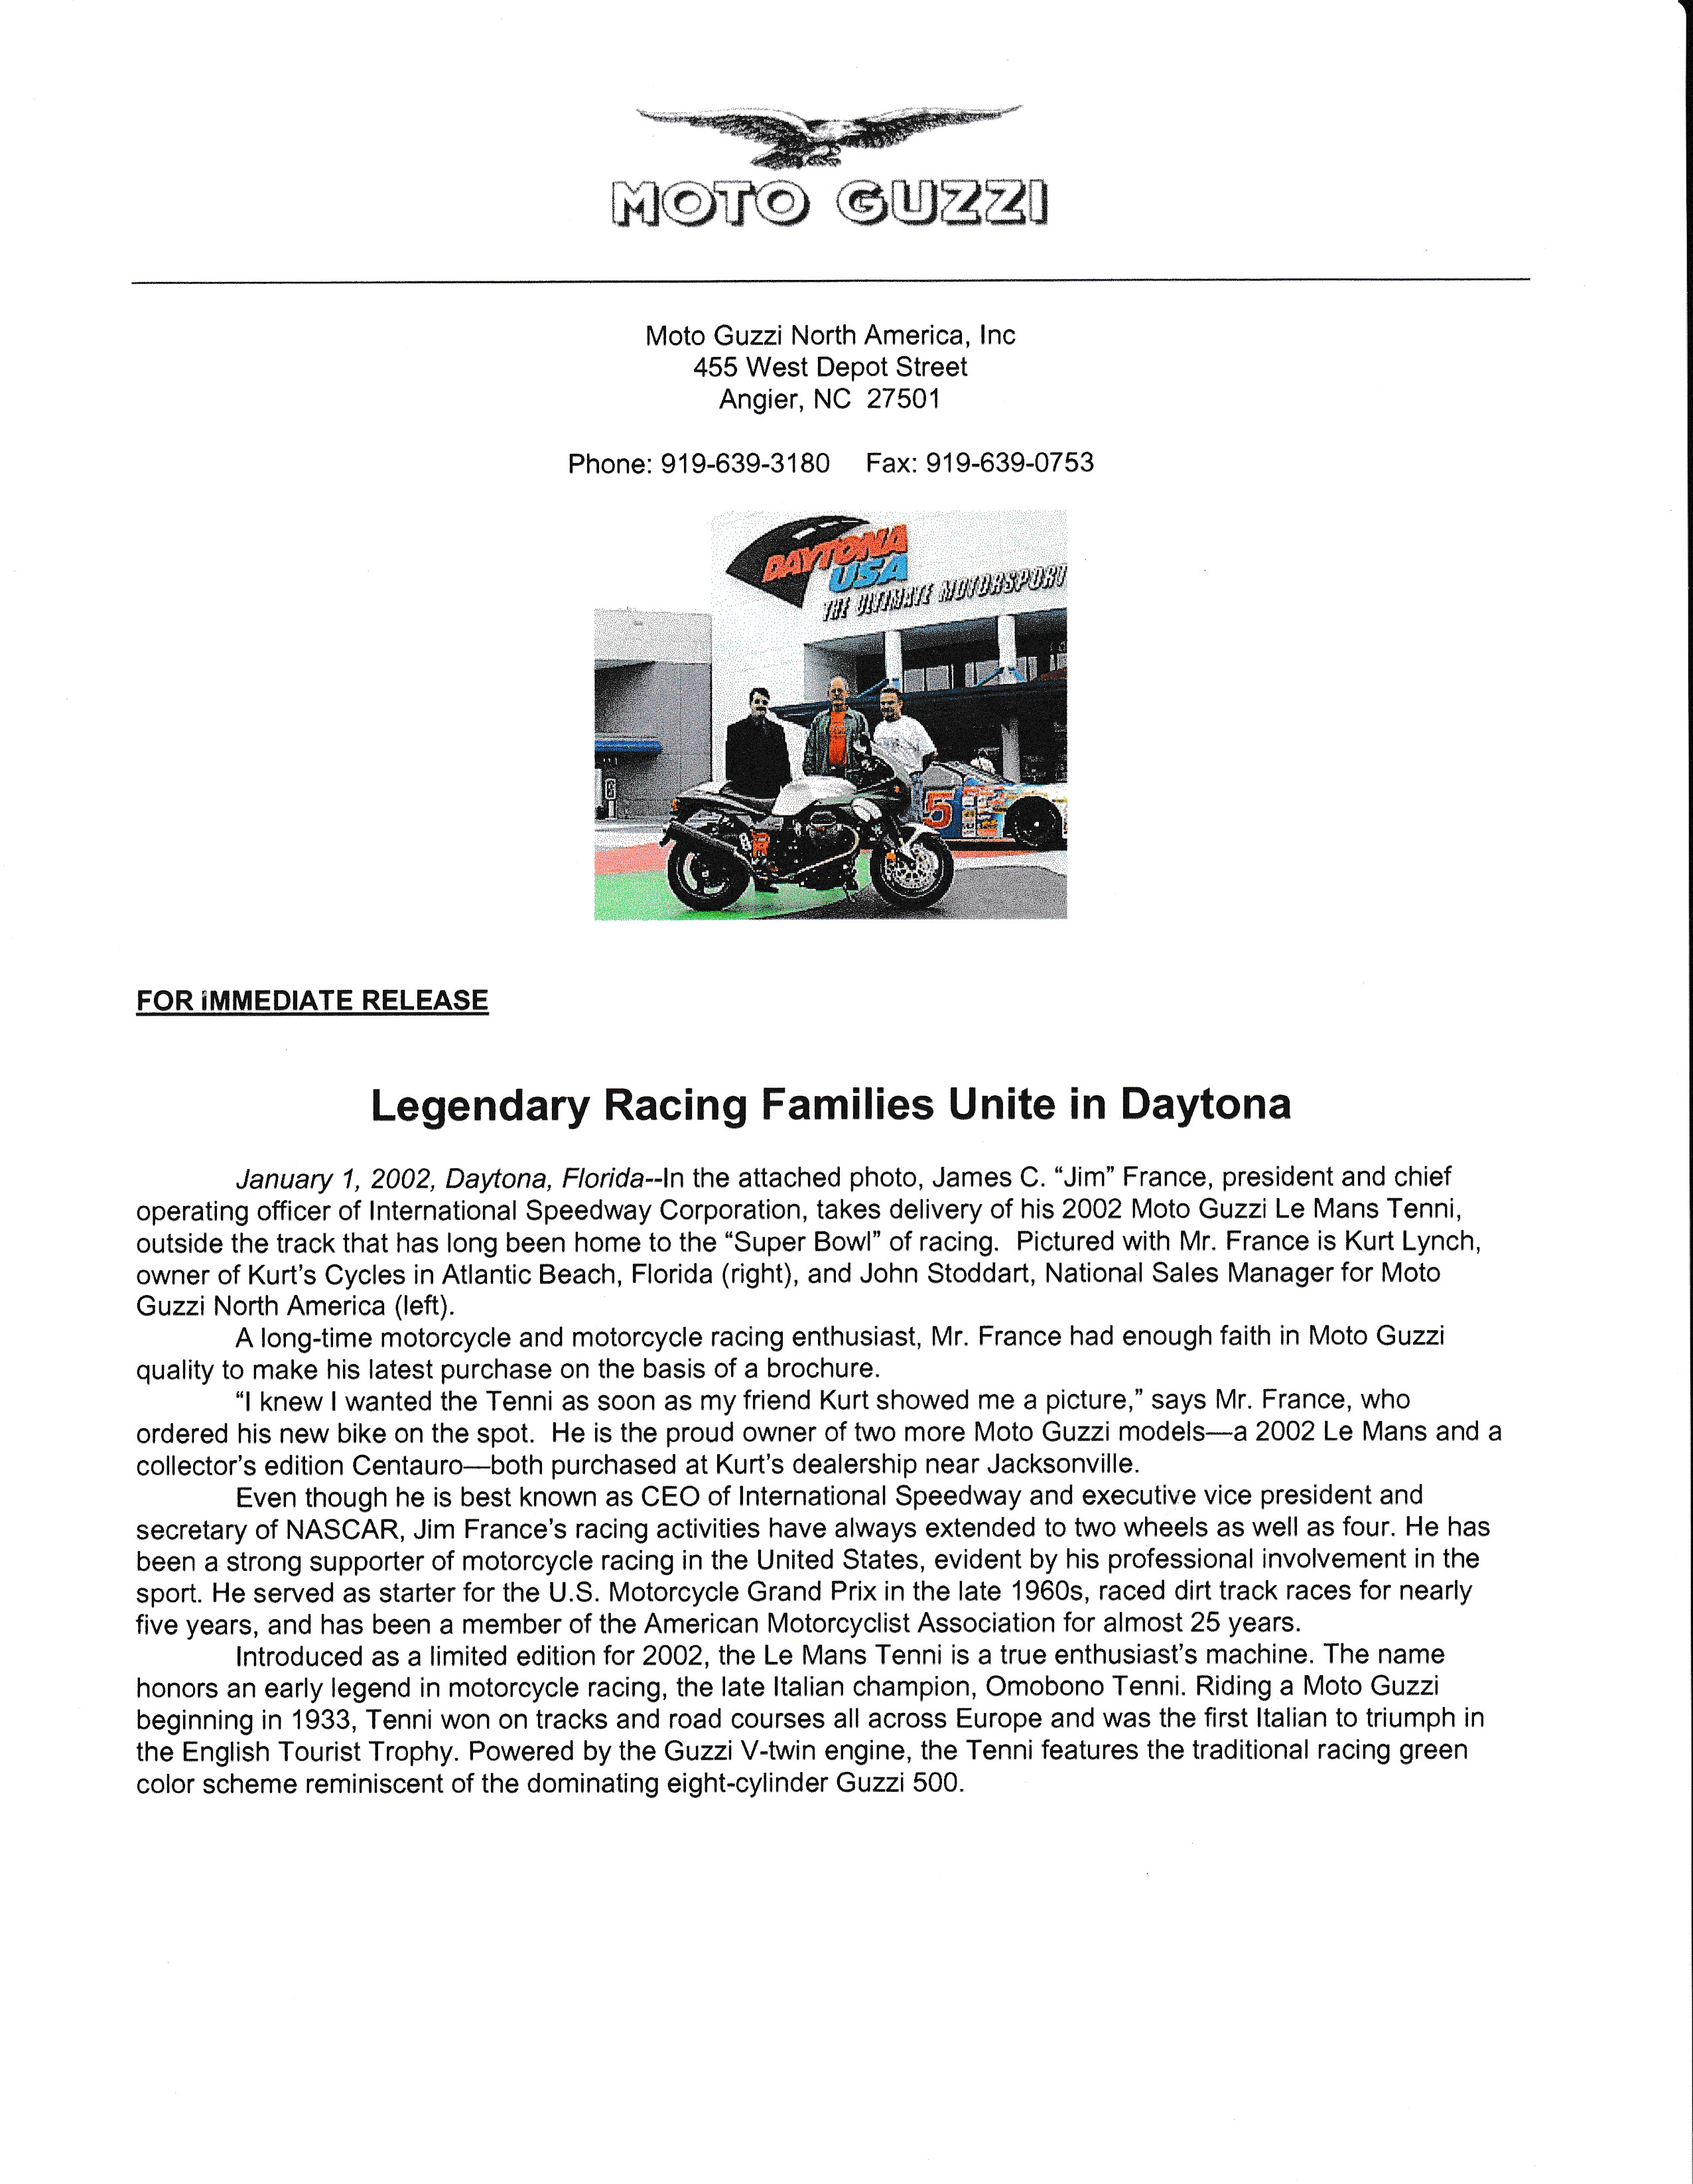 Press release - Legendary racing families unite in Daytona (2002 January 01)